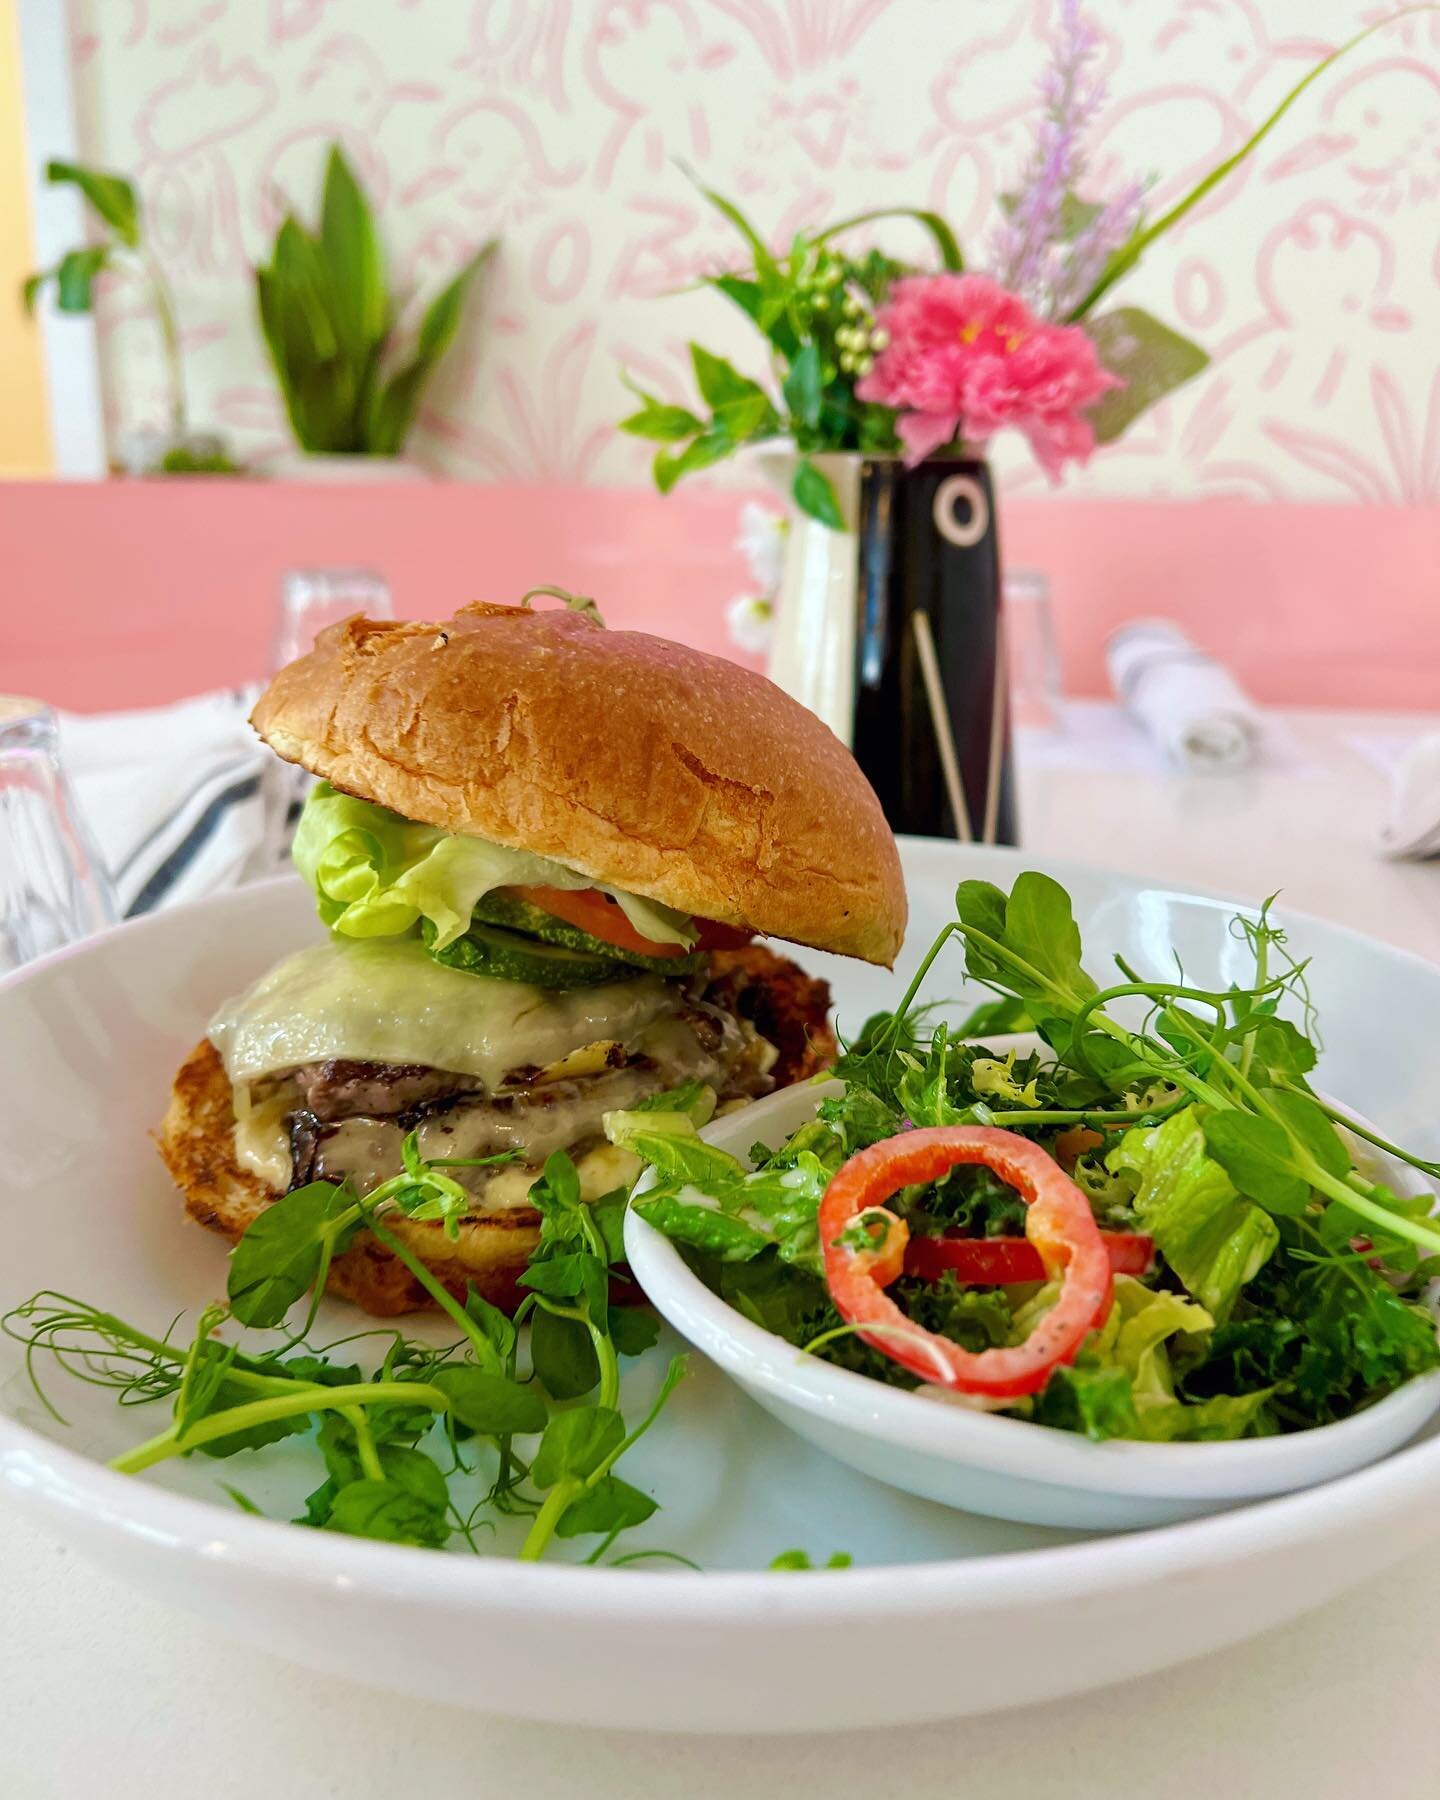 Sometimes you need a burger! 🍔💕

#brunchatbirdys #lowergardendistrict #nolabrunch